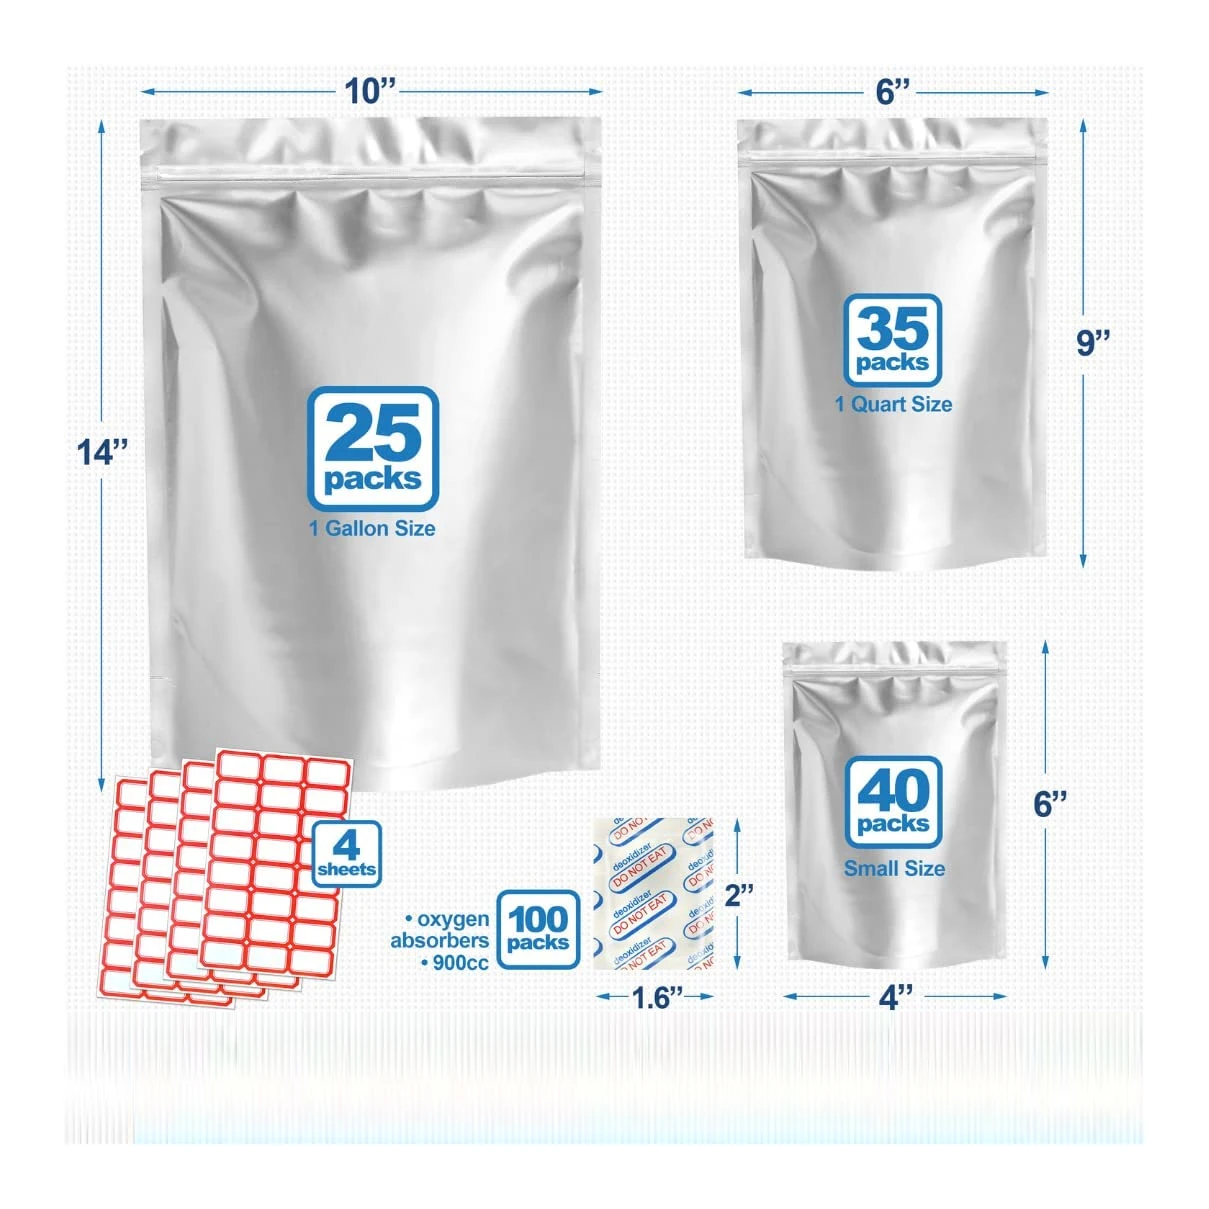 10 Packs 1-5 Gallon Mylar Bags Resealable Aluminum Foil Bags For